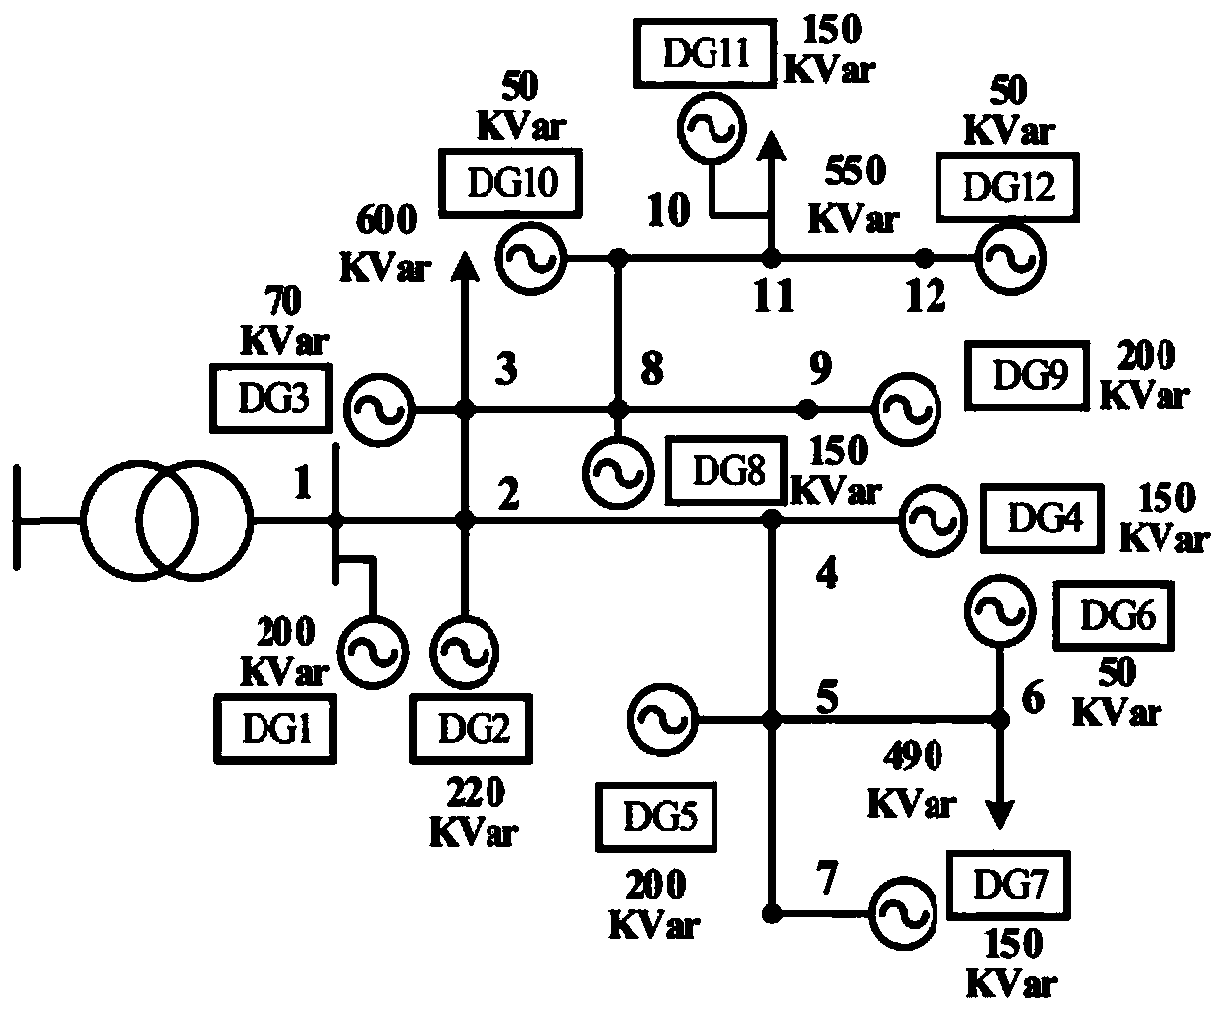 Decentralized voltage optimization method based on distributed power generation cluster